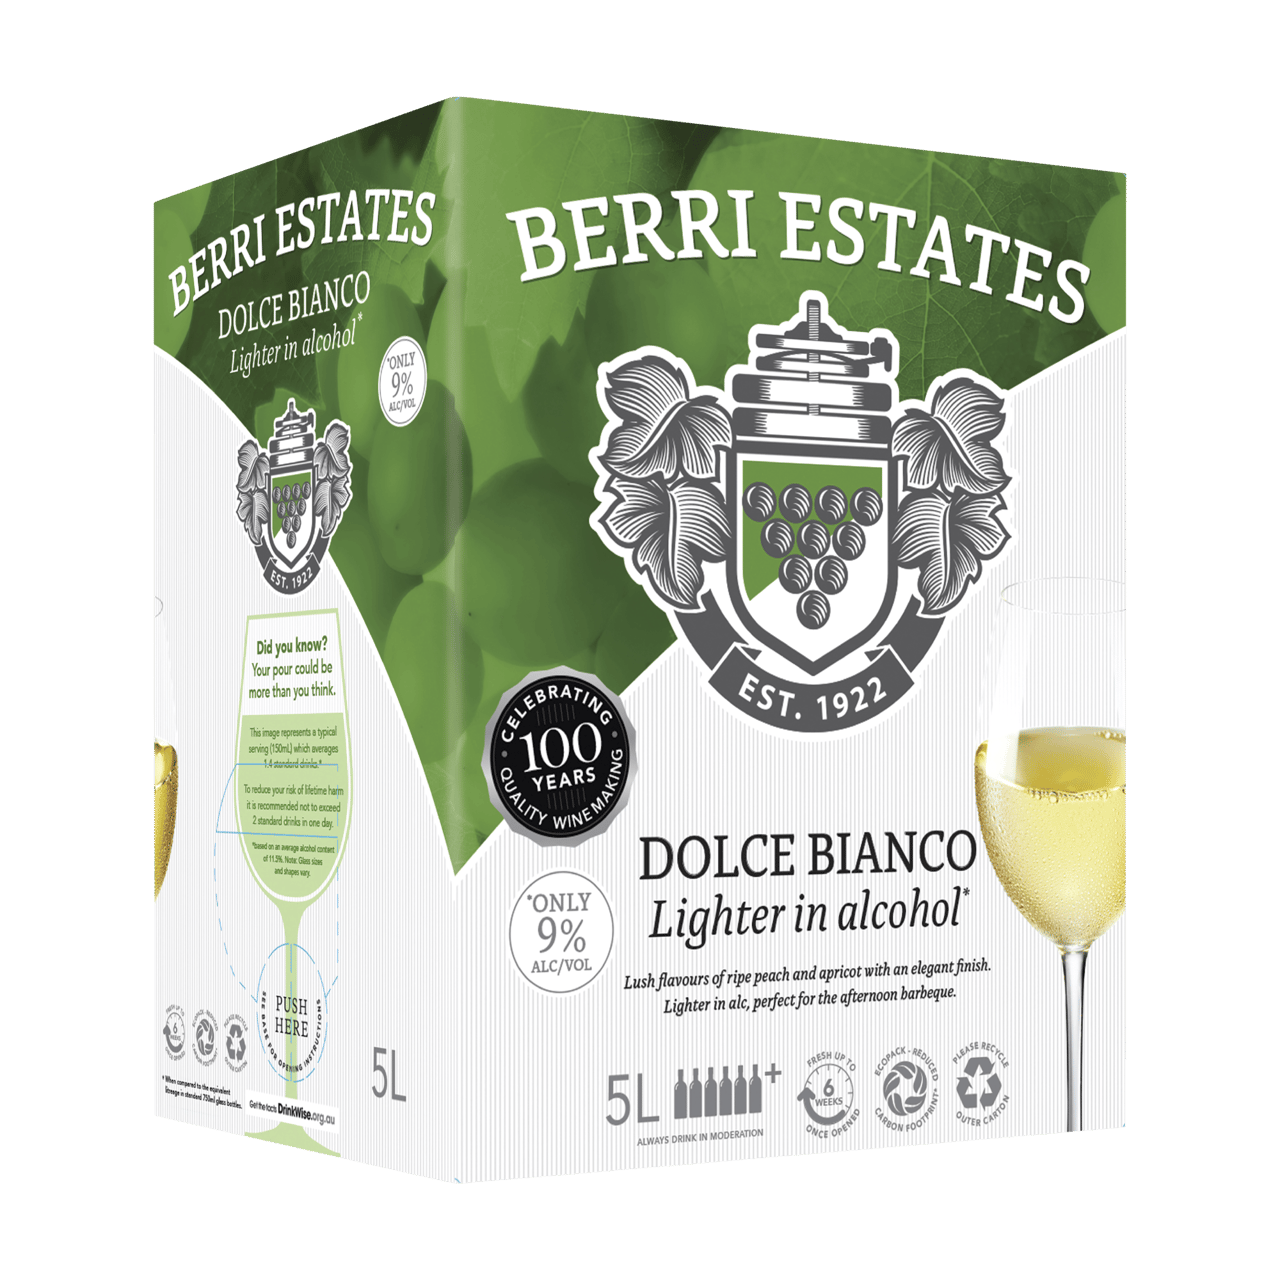 Berri Estates Dolce Bianco Cask 5L